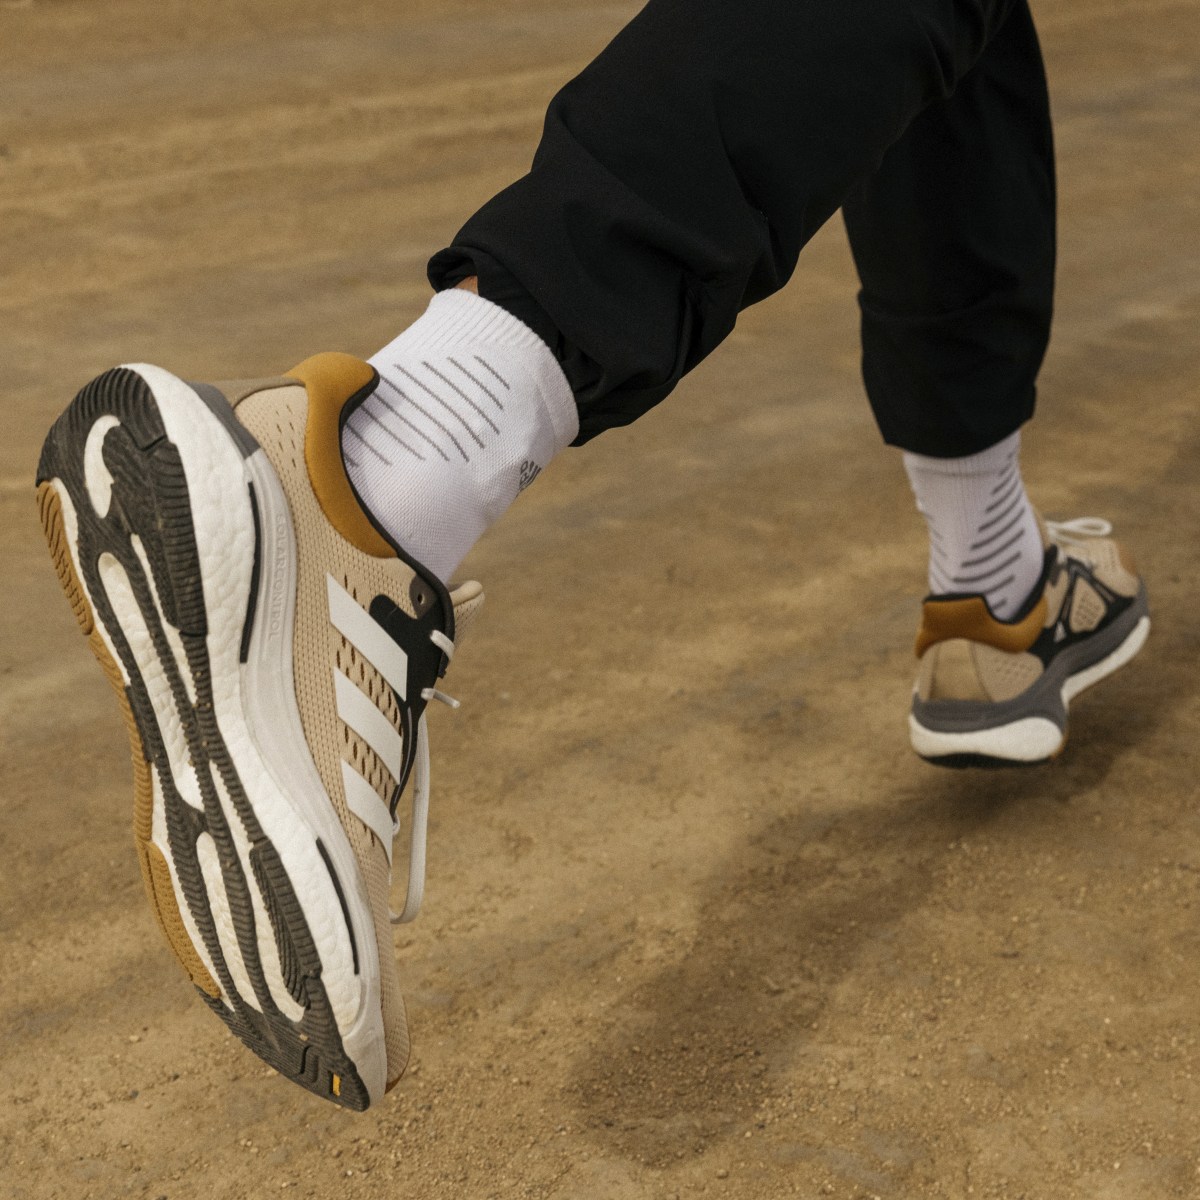 Adidas Solarcontrol Running Shoes. 6